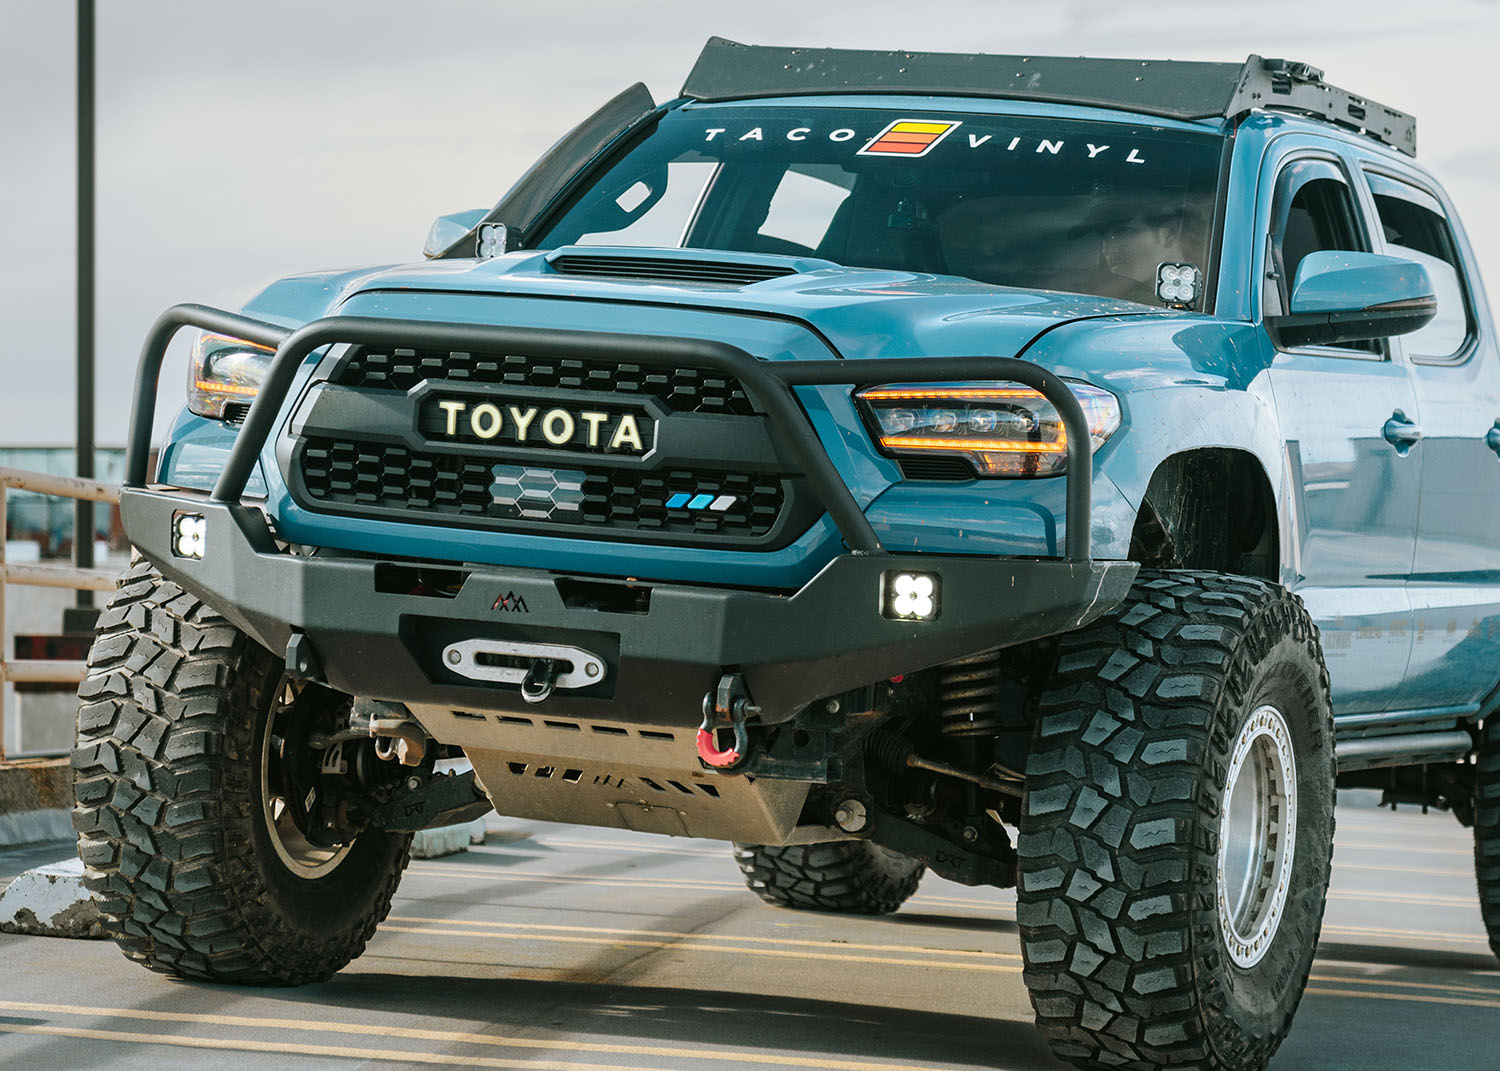 Toyota Tacoma Essentials Bundle Deal